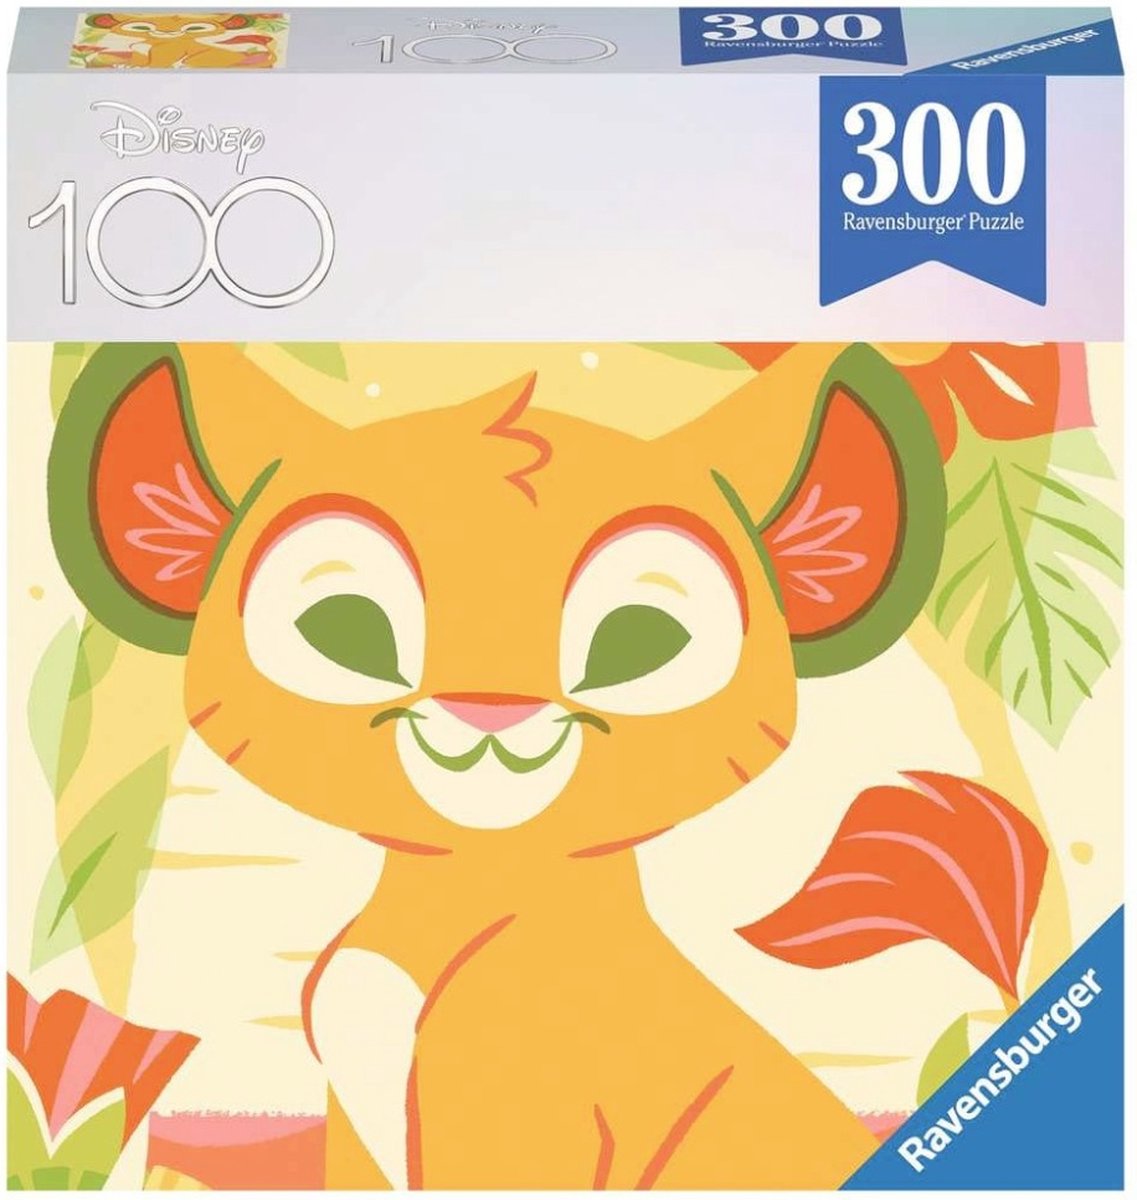 Ravensburger The Lion King - Disney 100 - Simba (300 pieces) Puzzel - Multicolours